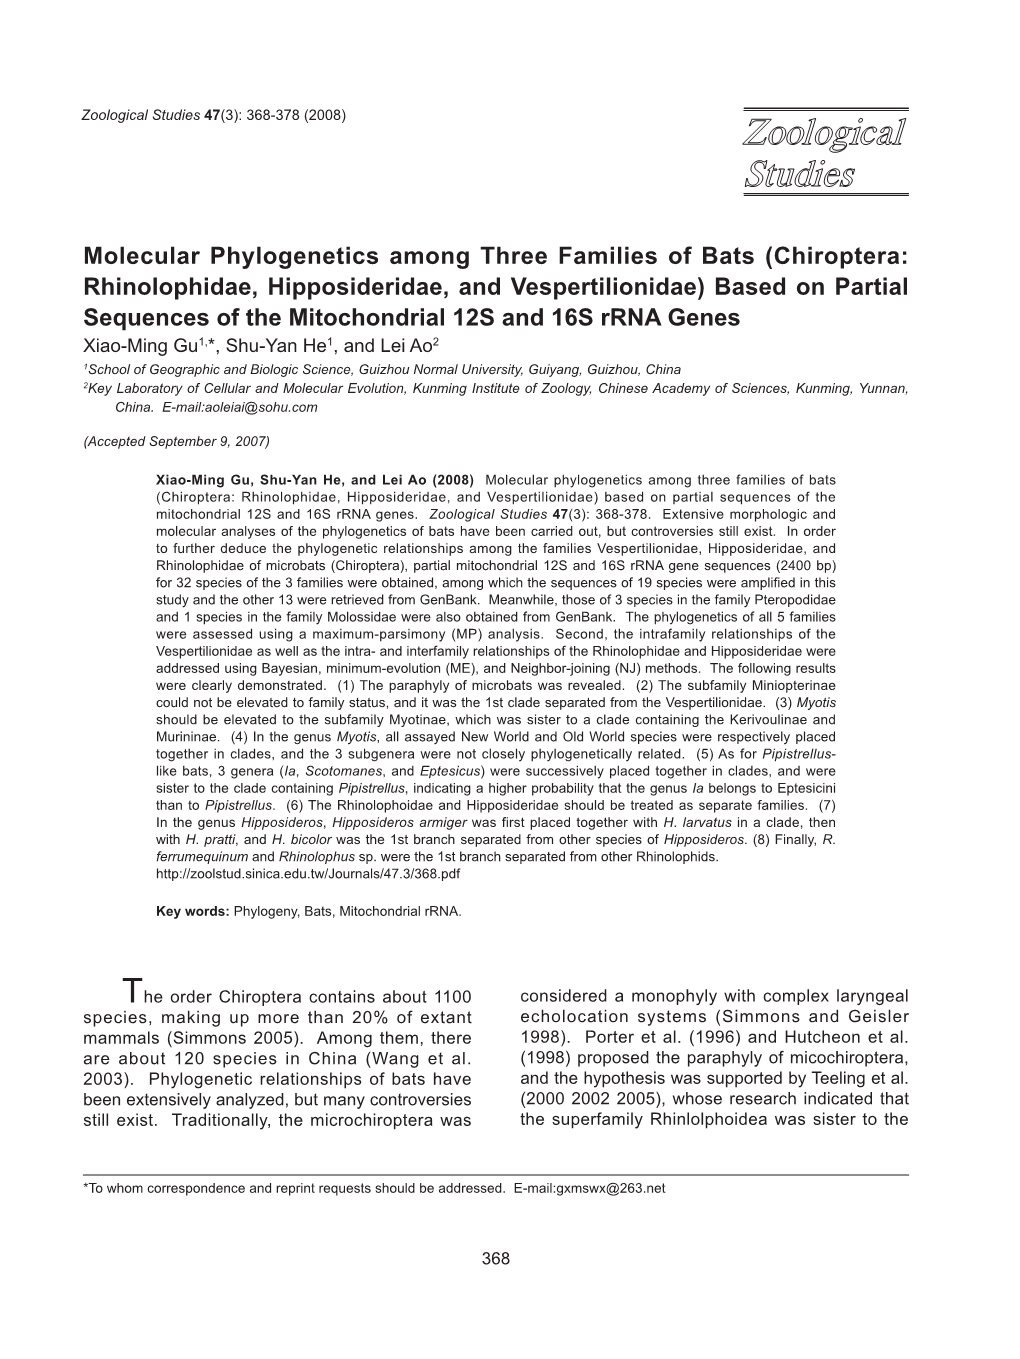 Molecular Phylogenetics Among Three Families